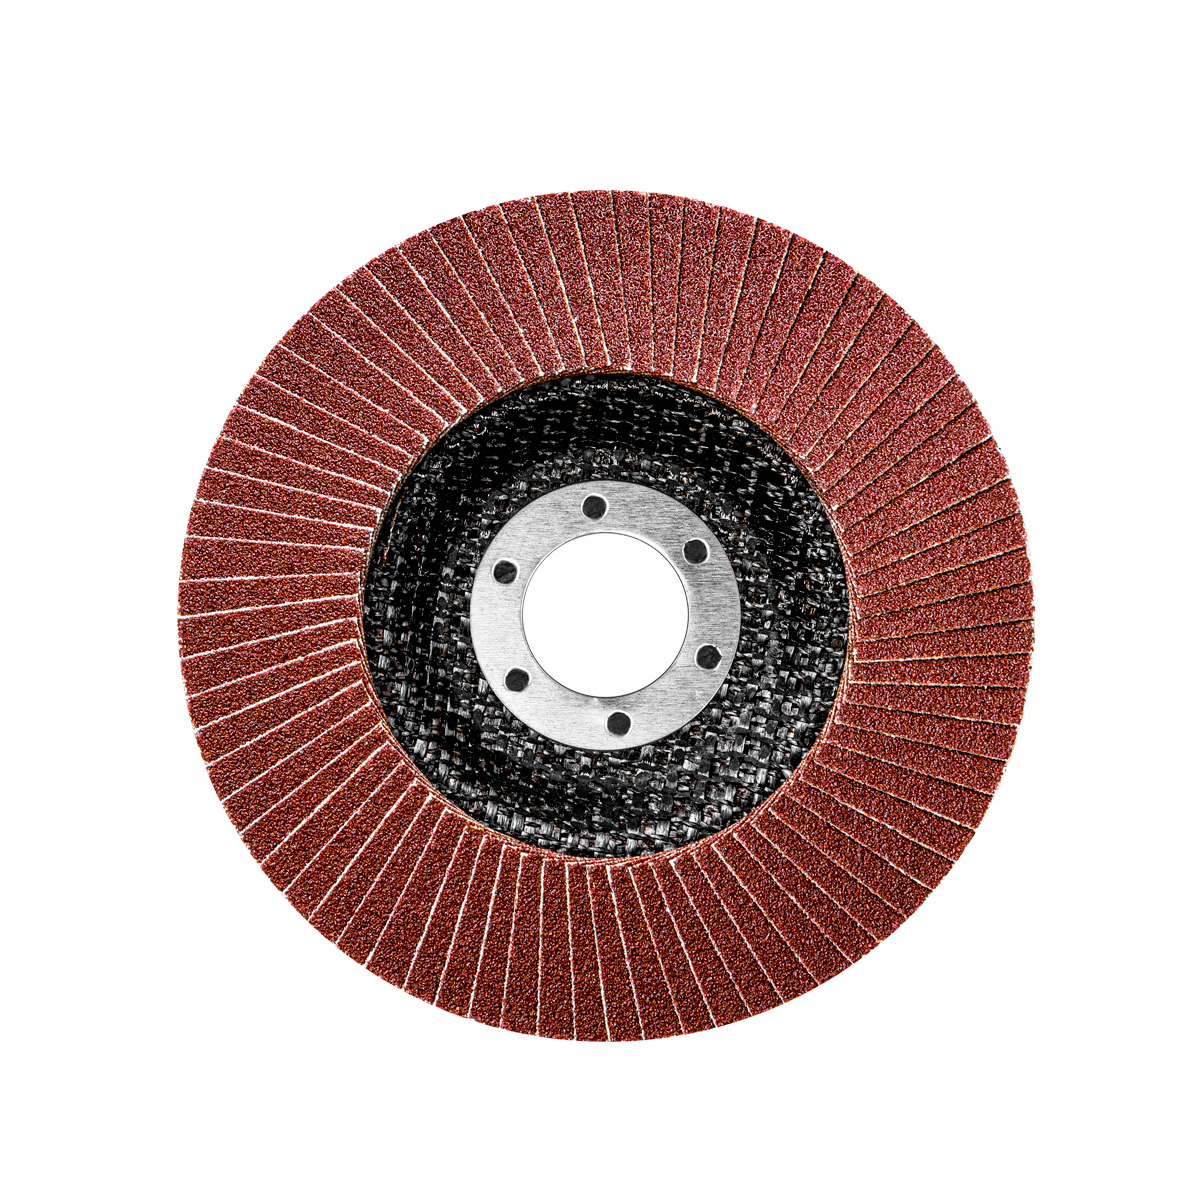 Brusni disk aluminijum, granulacija 100, ø115mm 